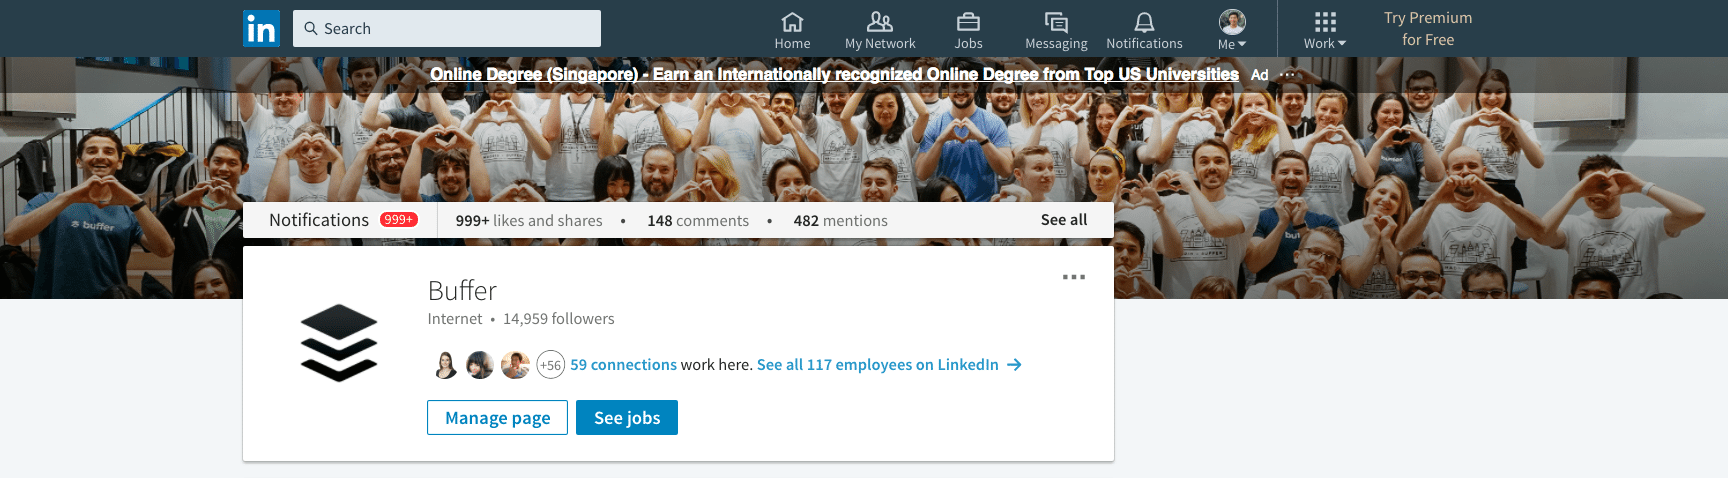 LinkedIn Company Page background photo